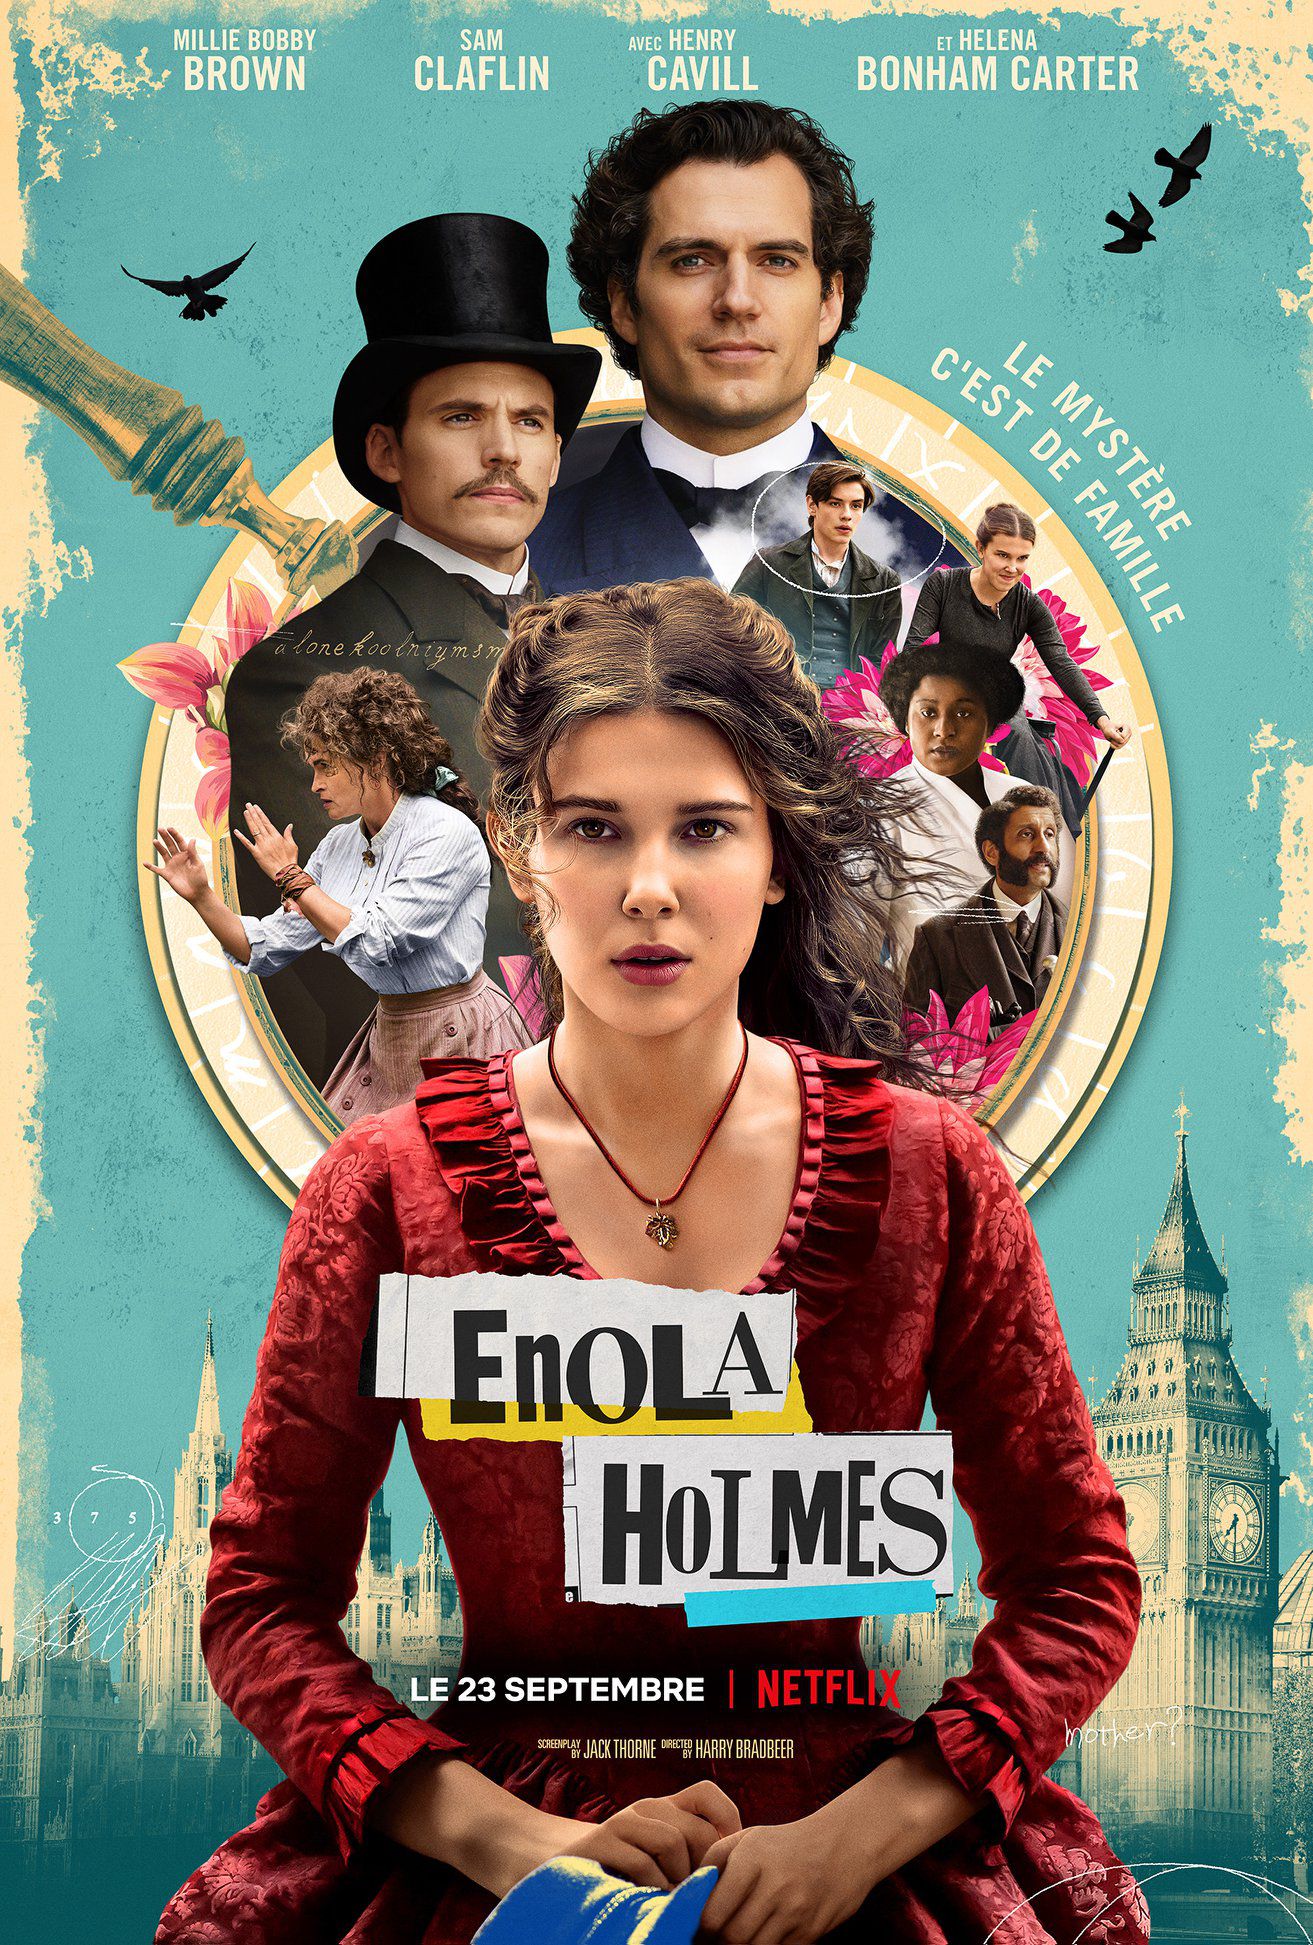 Enola Holmes - Film (2020) streaming VF gratuit complet